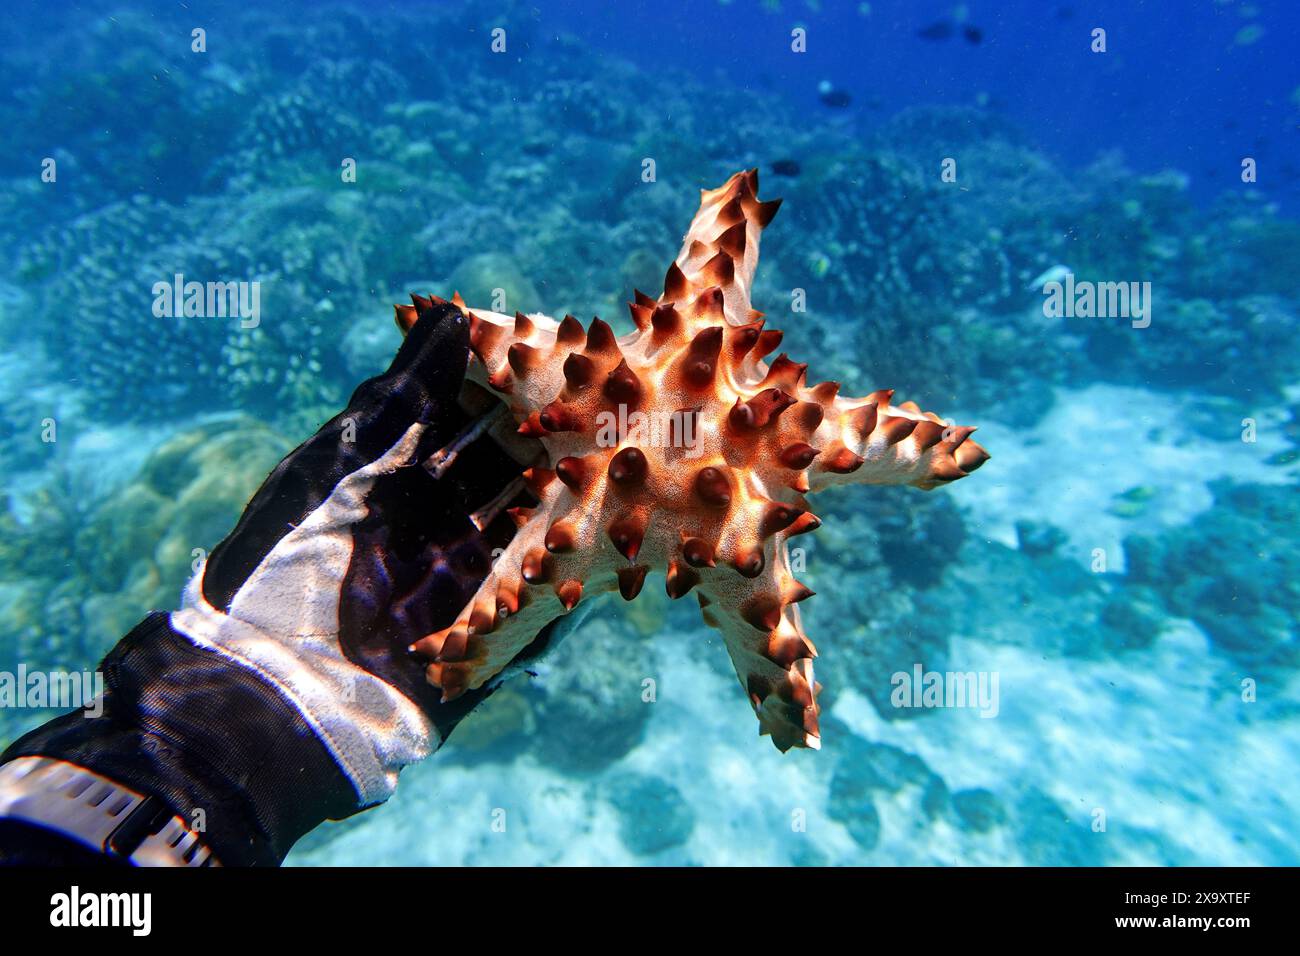 Indonesia Bunaken - Marine life Coral reef with Starfish Stock Photo